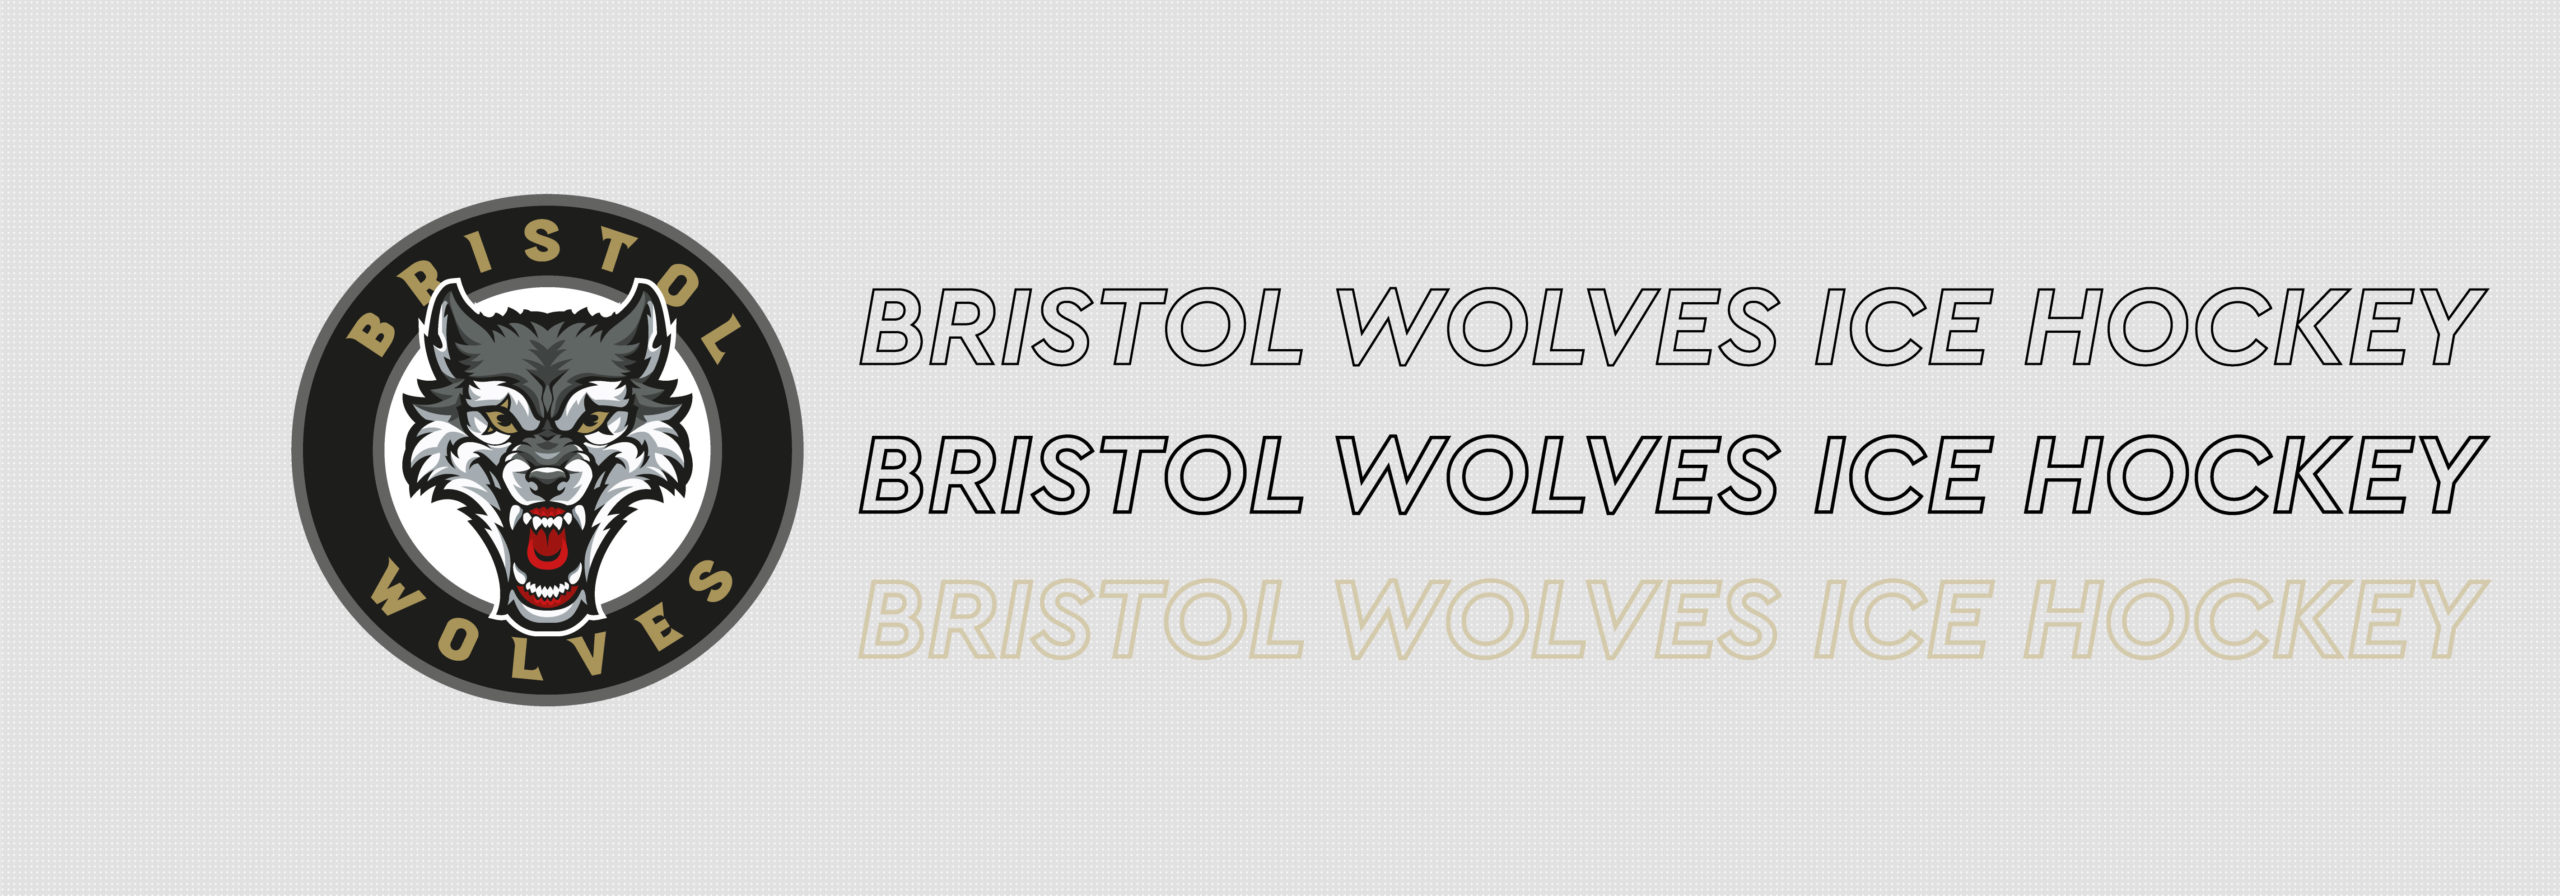 Bristol Wolves Charity Ice Hockey Jersey